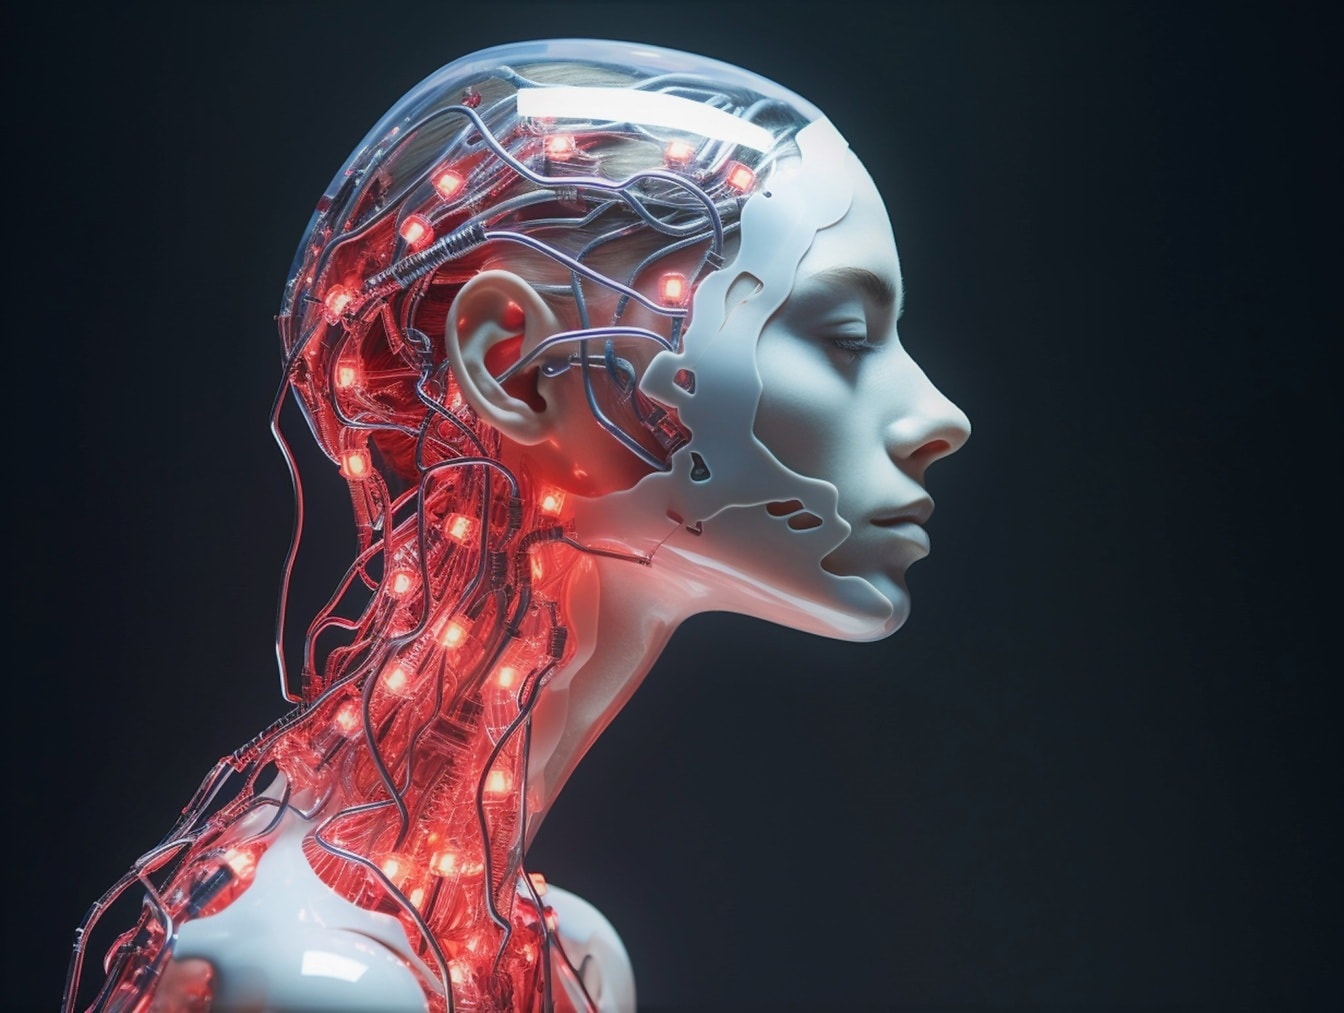 Robot cyborg humanoid wanita dengan kecerdasan buatan